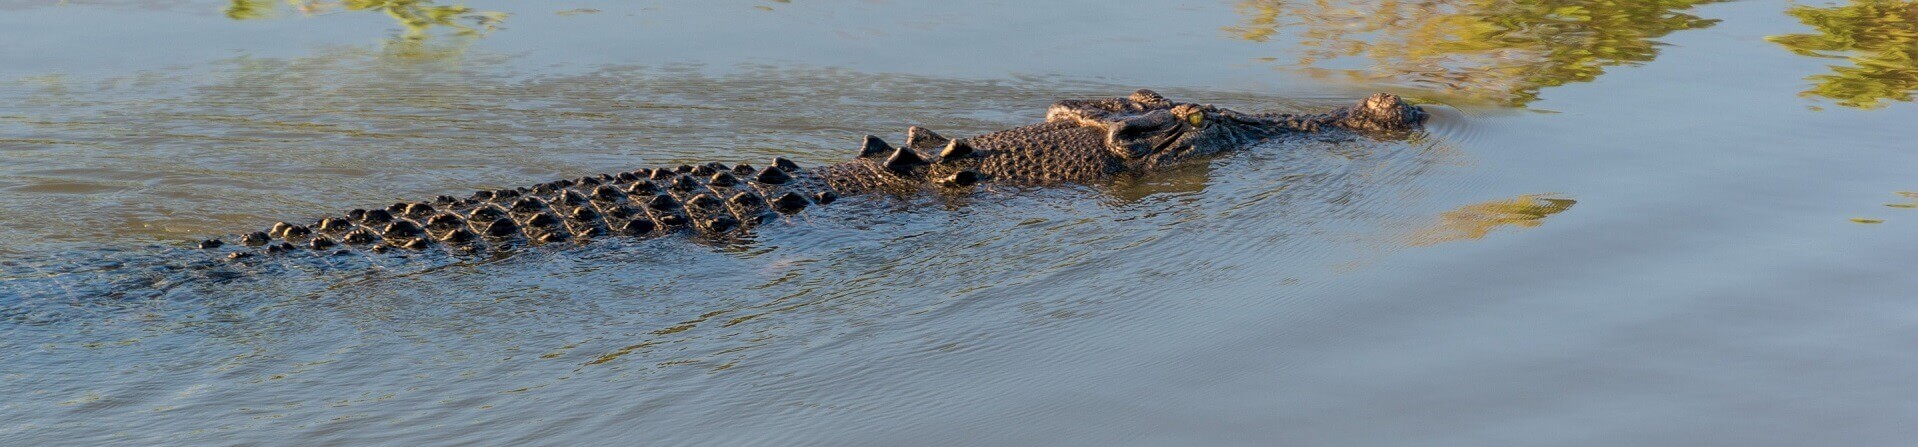 Morning Jumping Crocodile Cruise from Darwin 9